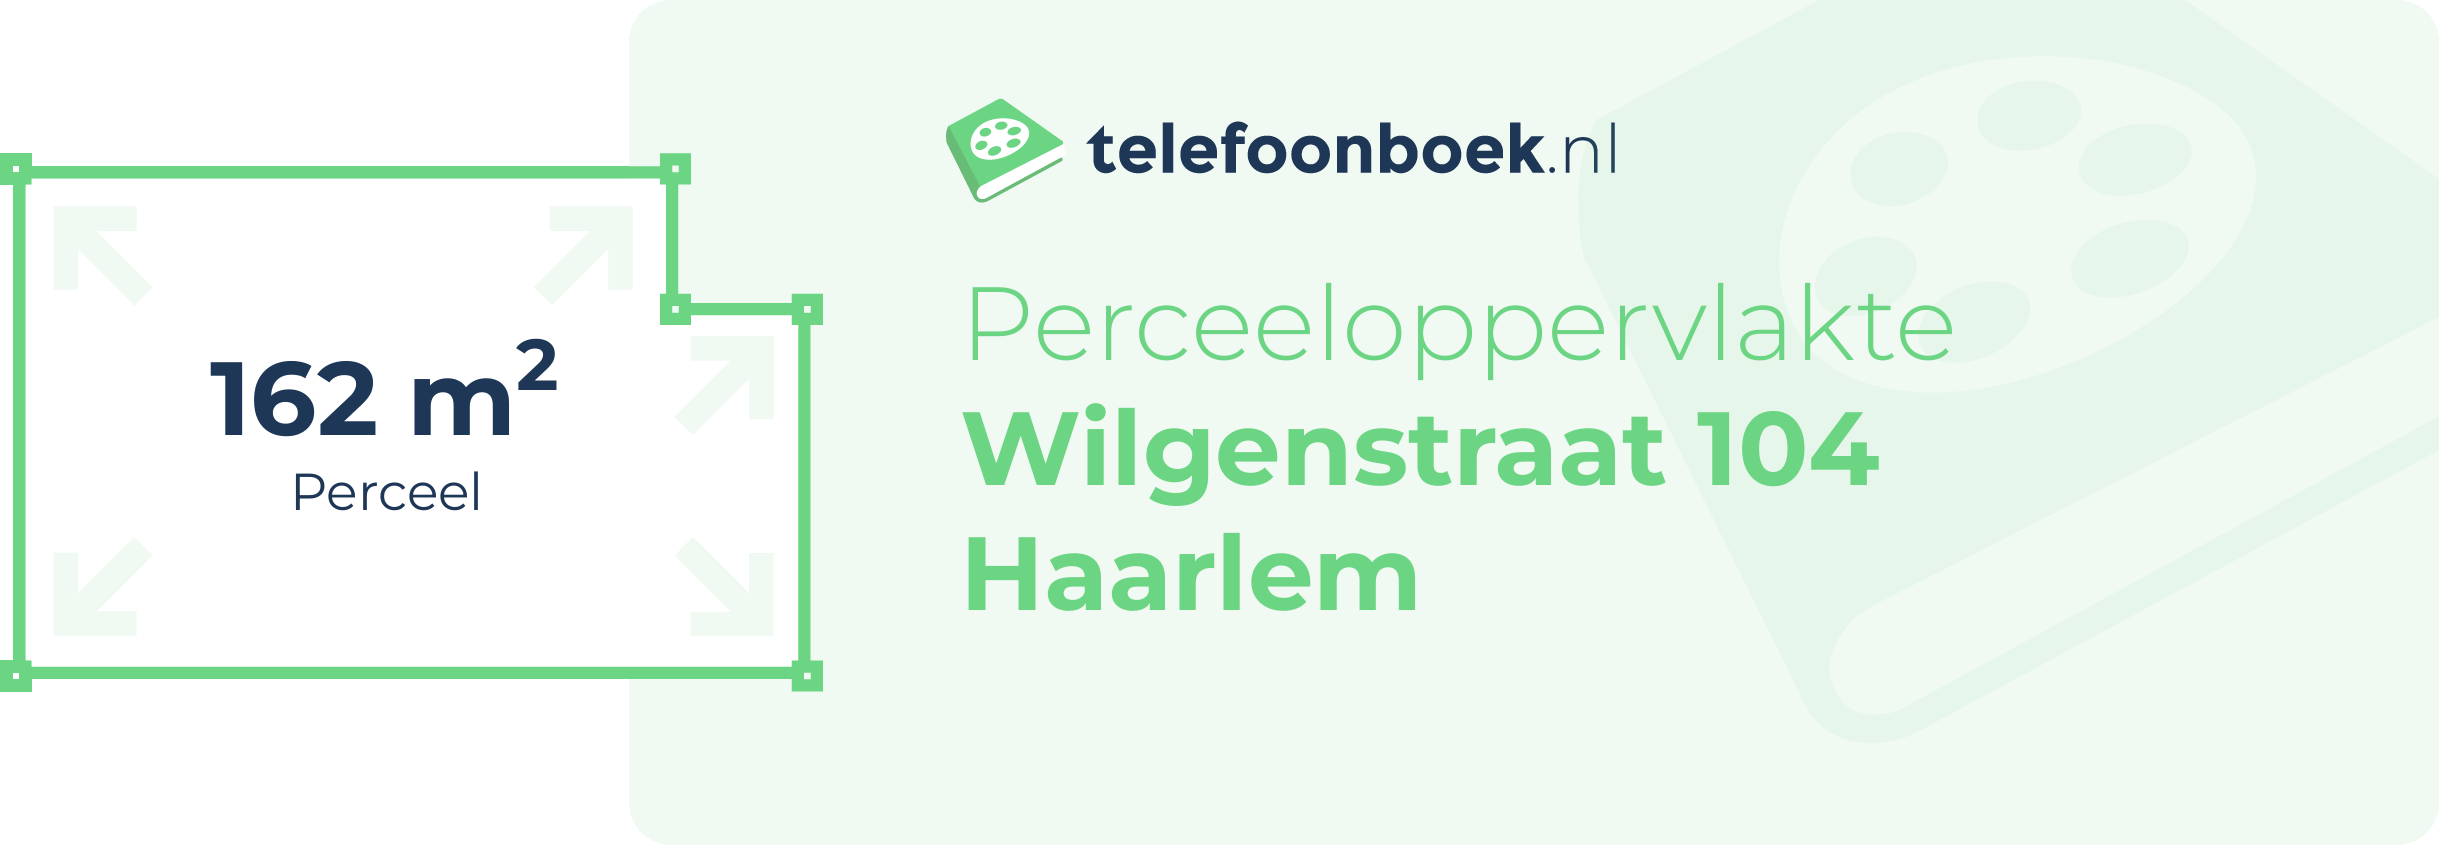 Perceeloppervlakte Wilgenstraat 104 Haarlem